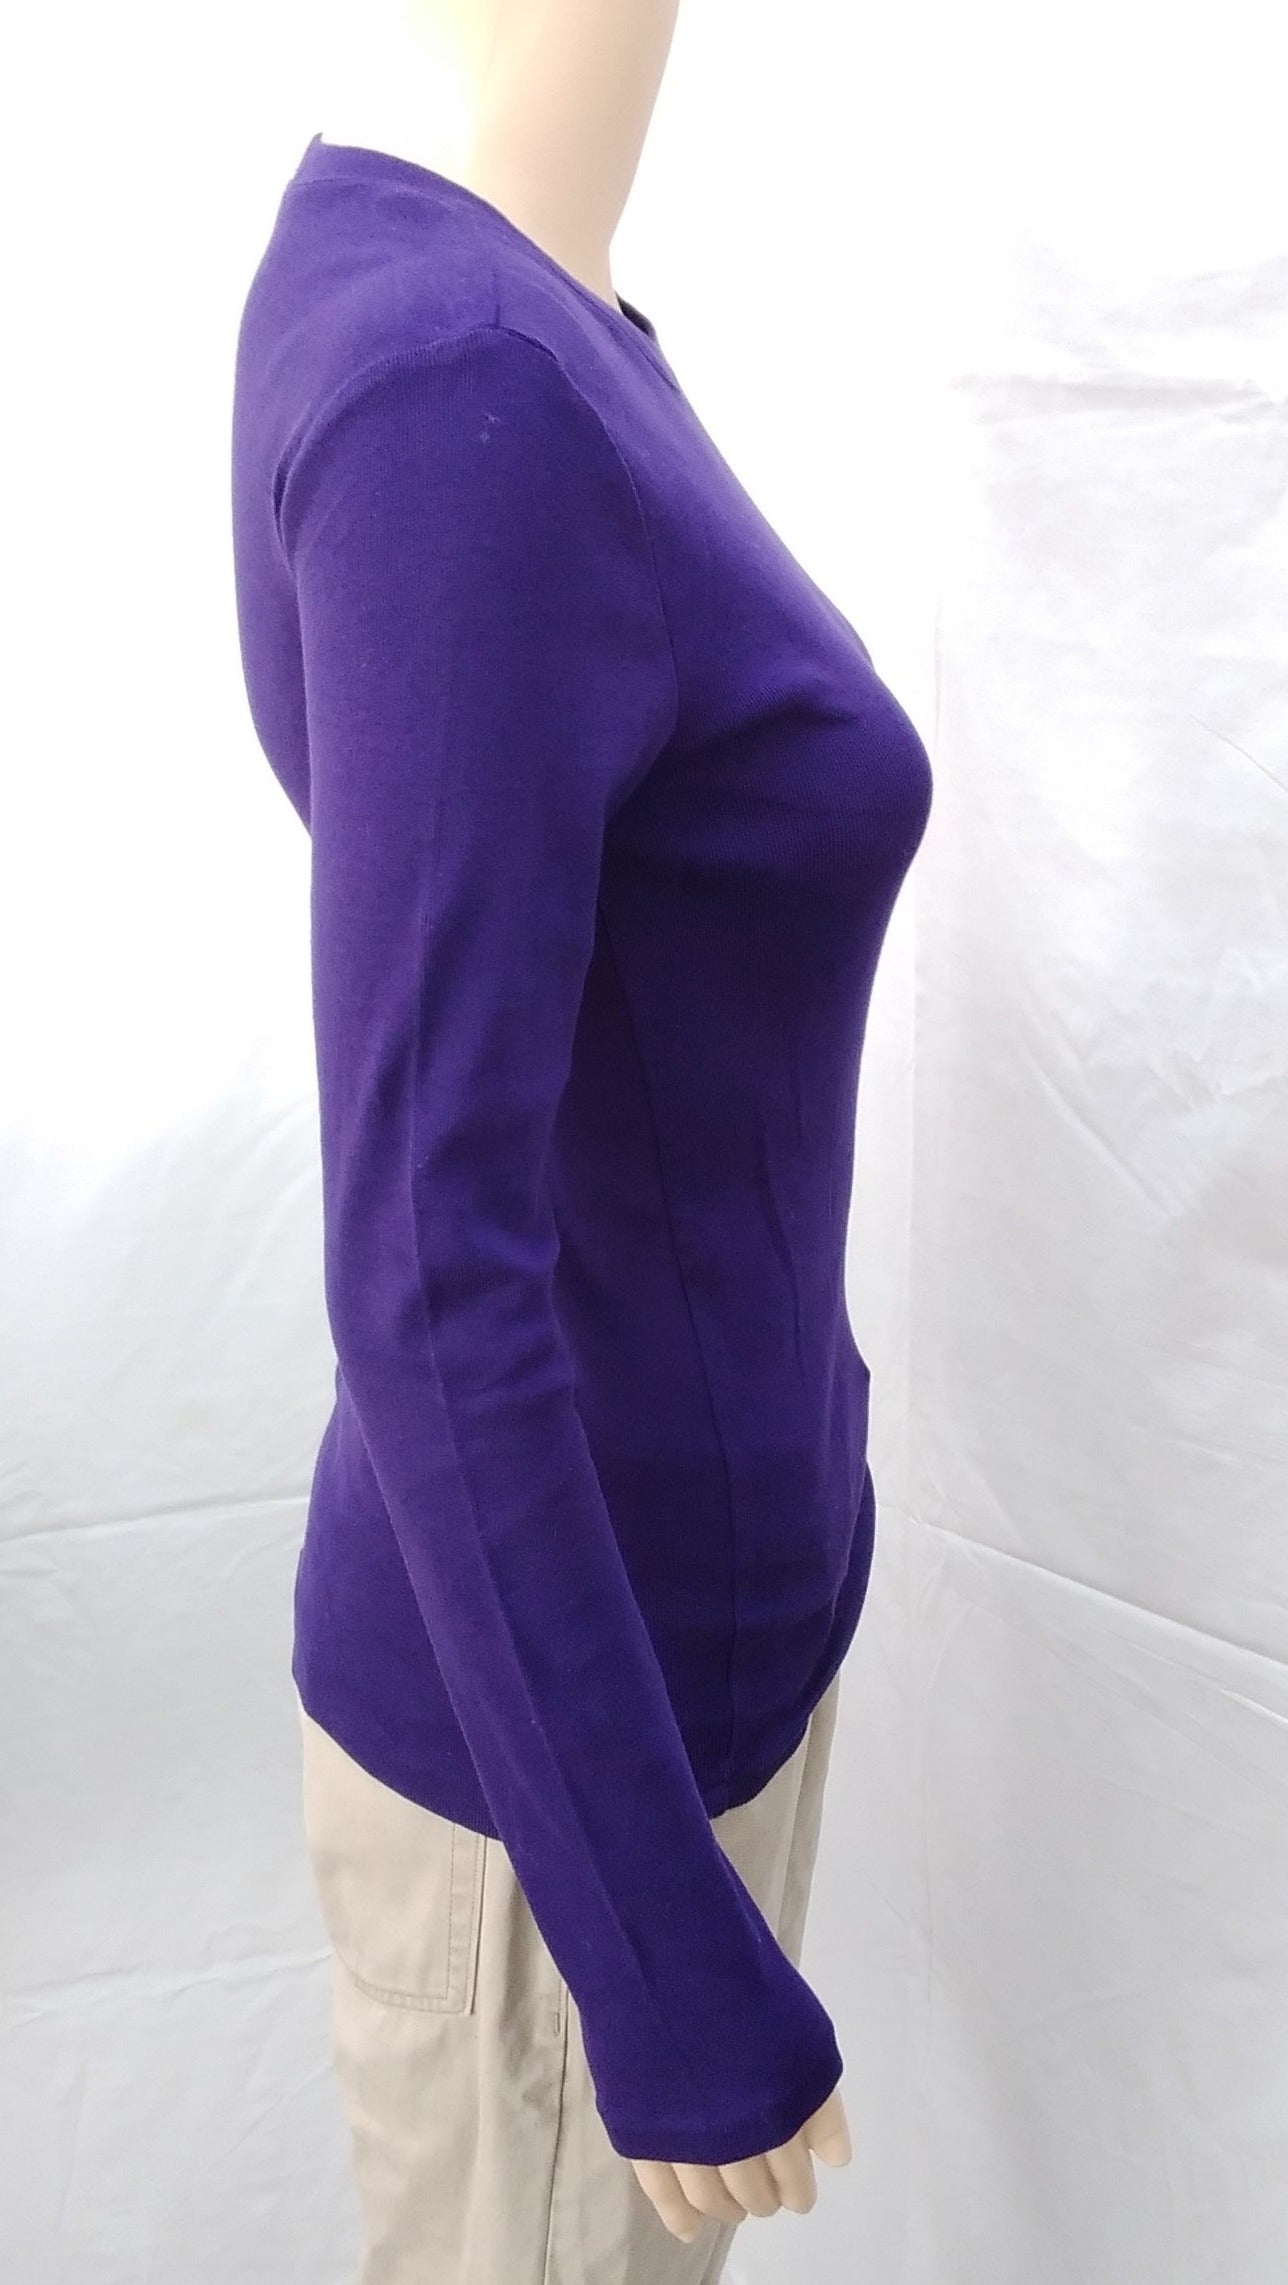 NWT -- Ralph Lauren Sport Women's Purple Cotton Crew Neck Sweater -- Size: S